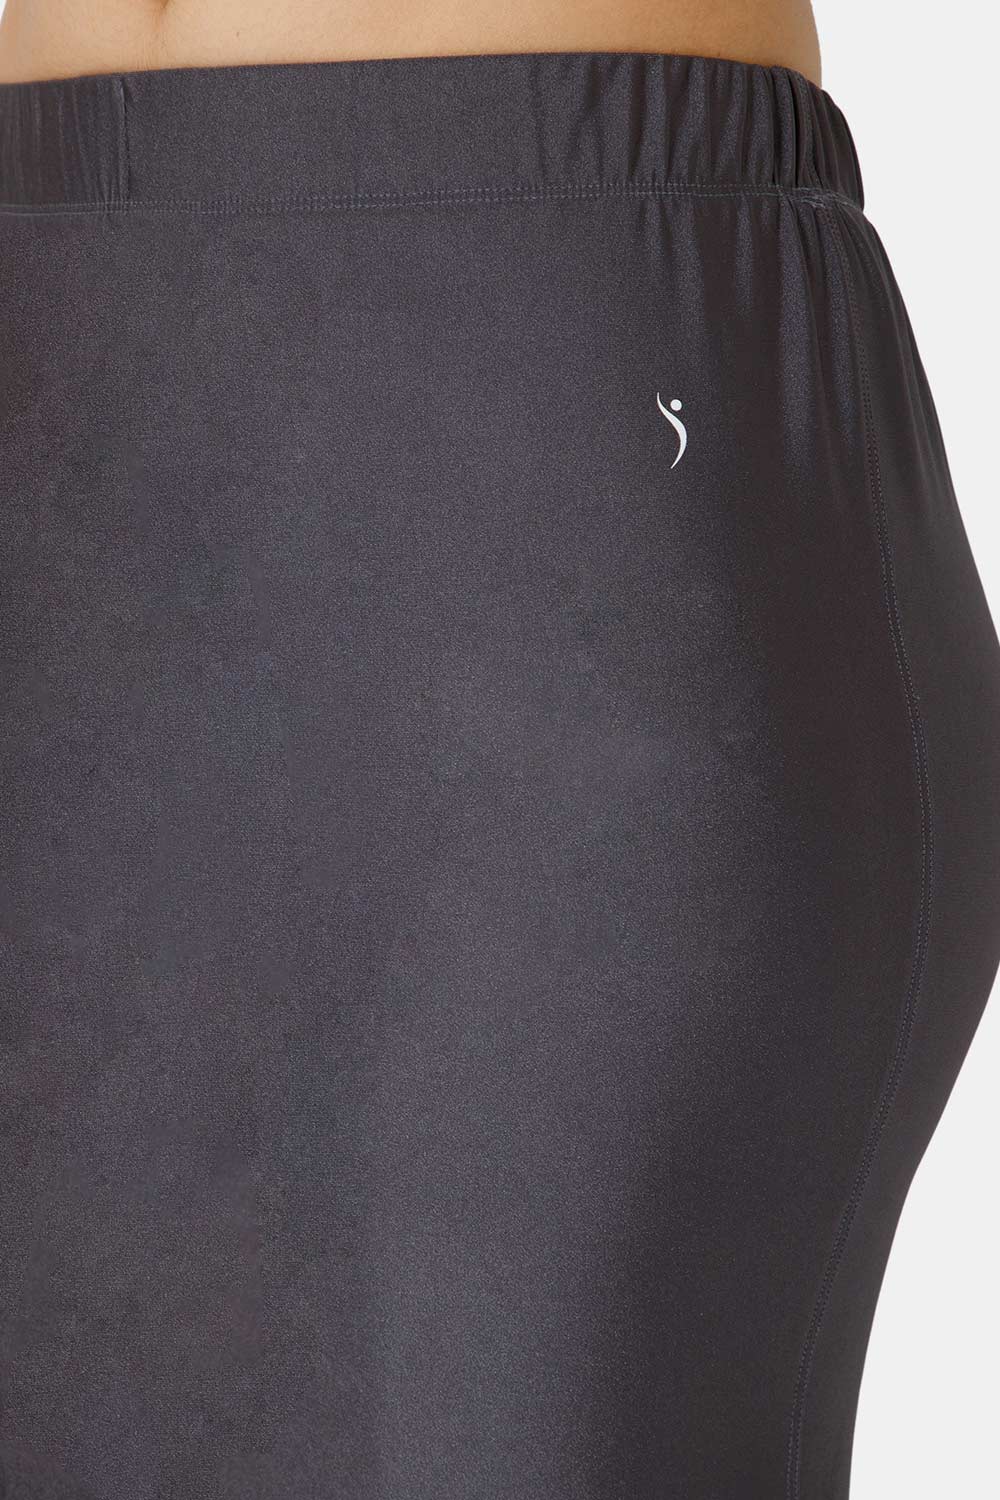 Intimacy Seamless Sweat Absorbent Mermaid Saree Shimmer Shapewear - Dark Grey - SW03